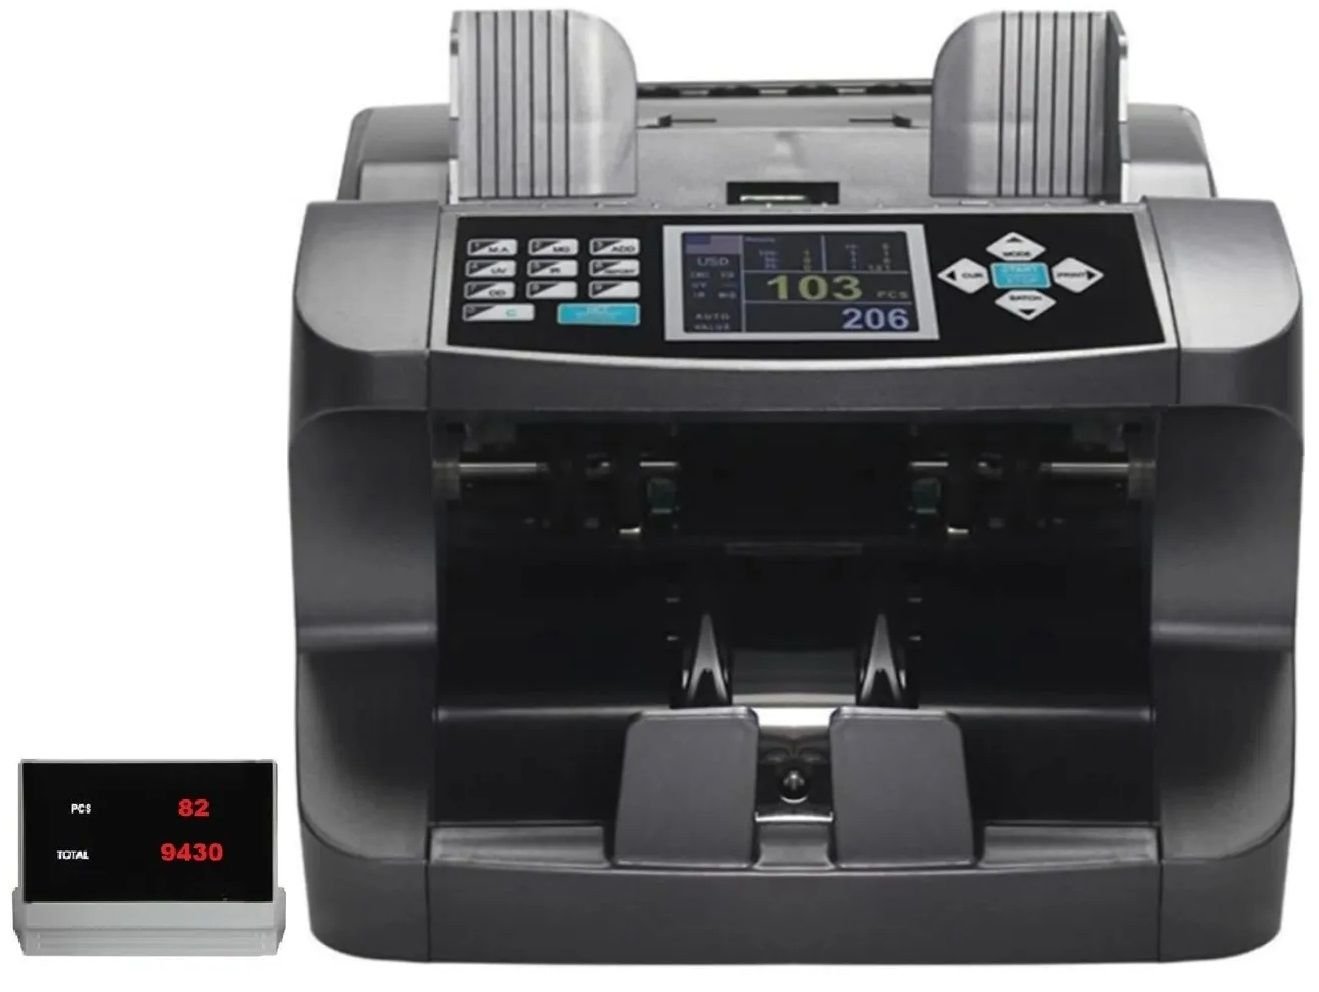 Baove GB9300 Pro Mix Karışık Para Sayma Makinesi ve Sahte Yakalama - TL, Euro, Usd + Müşteri Ekranı